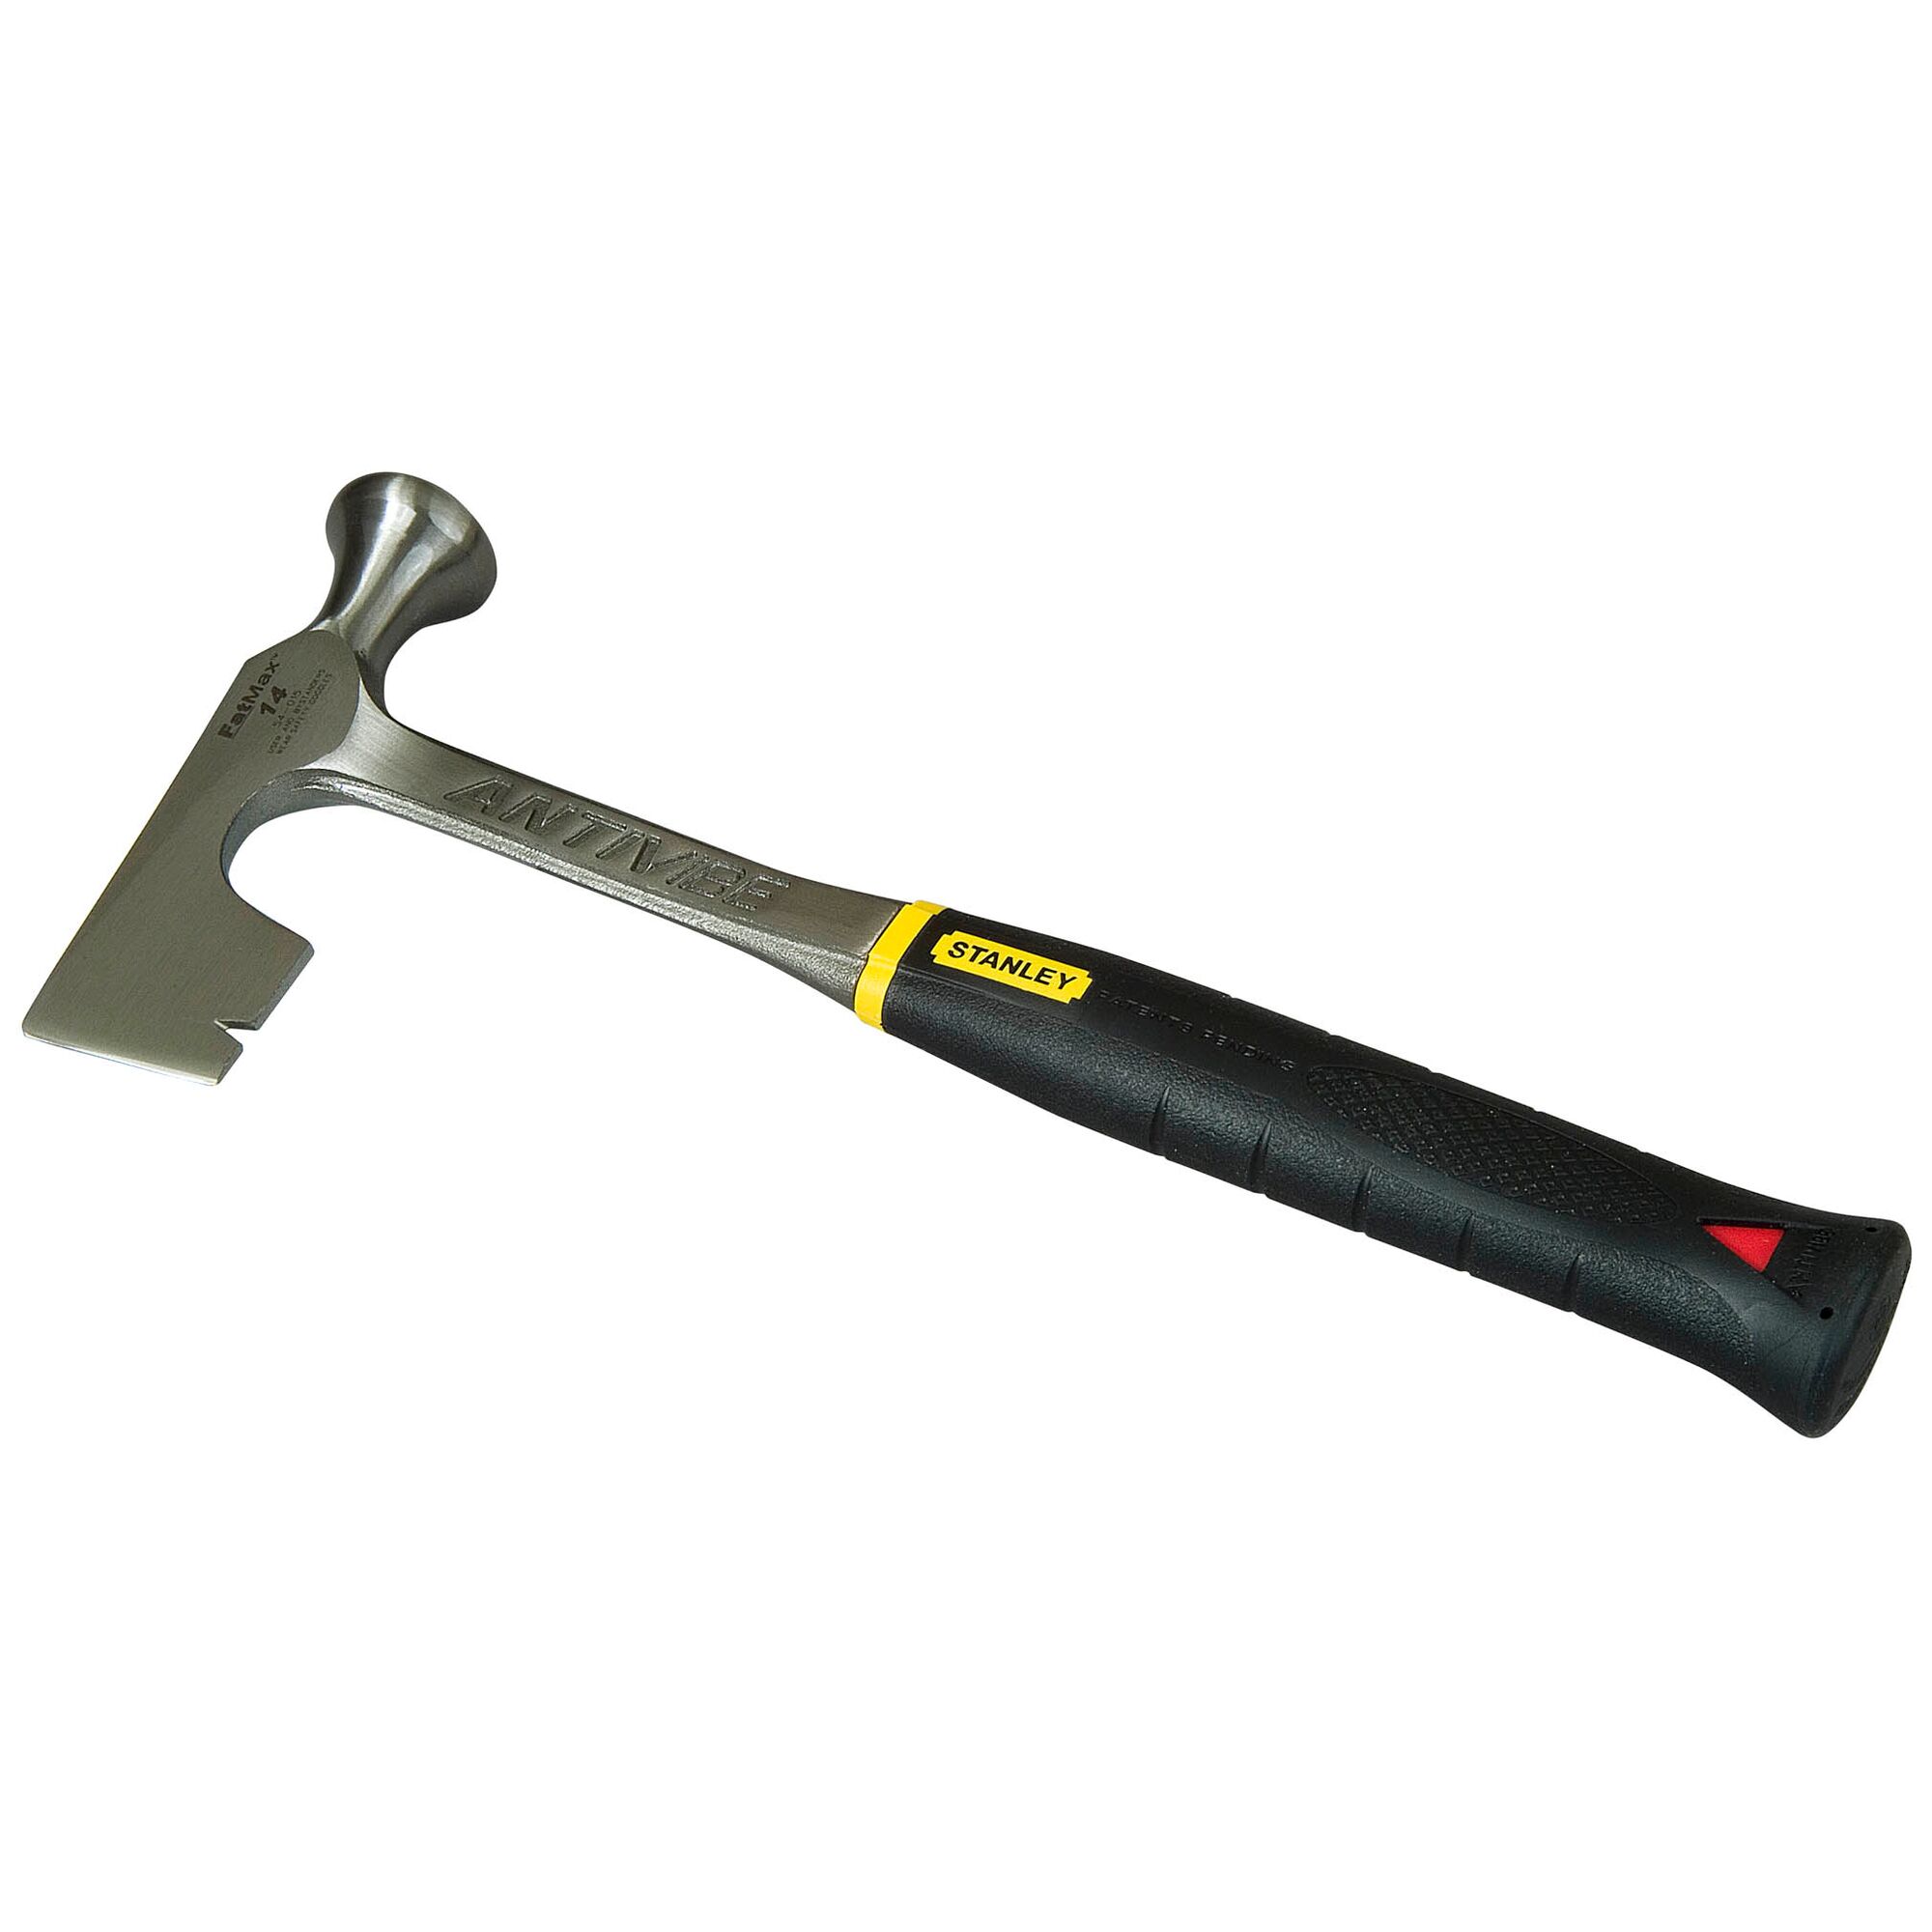 STANLEY® FATMAX® 20oz/565g Ant-Vibe Brick Hammer | STANLEY